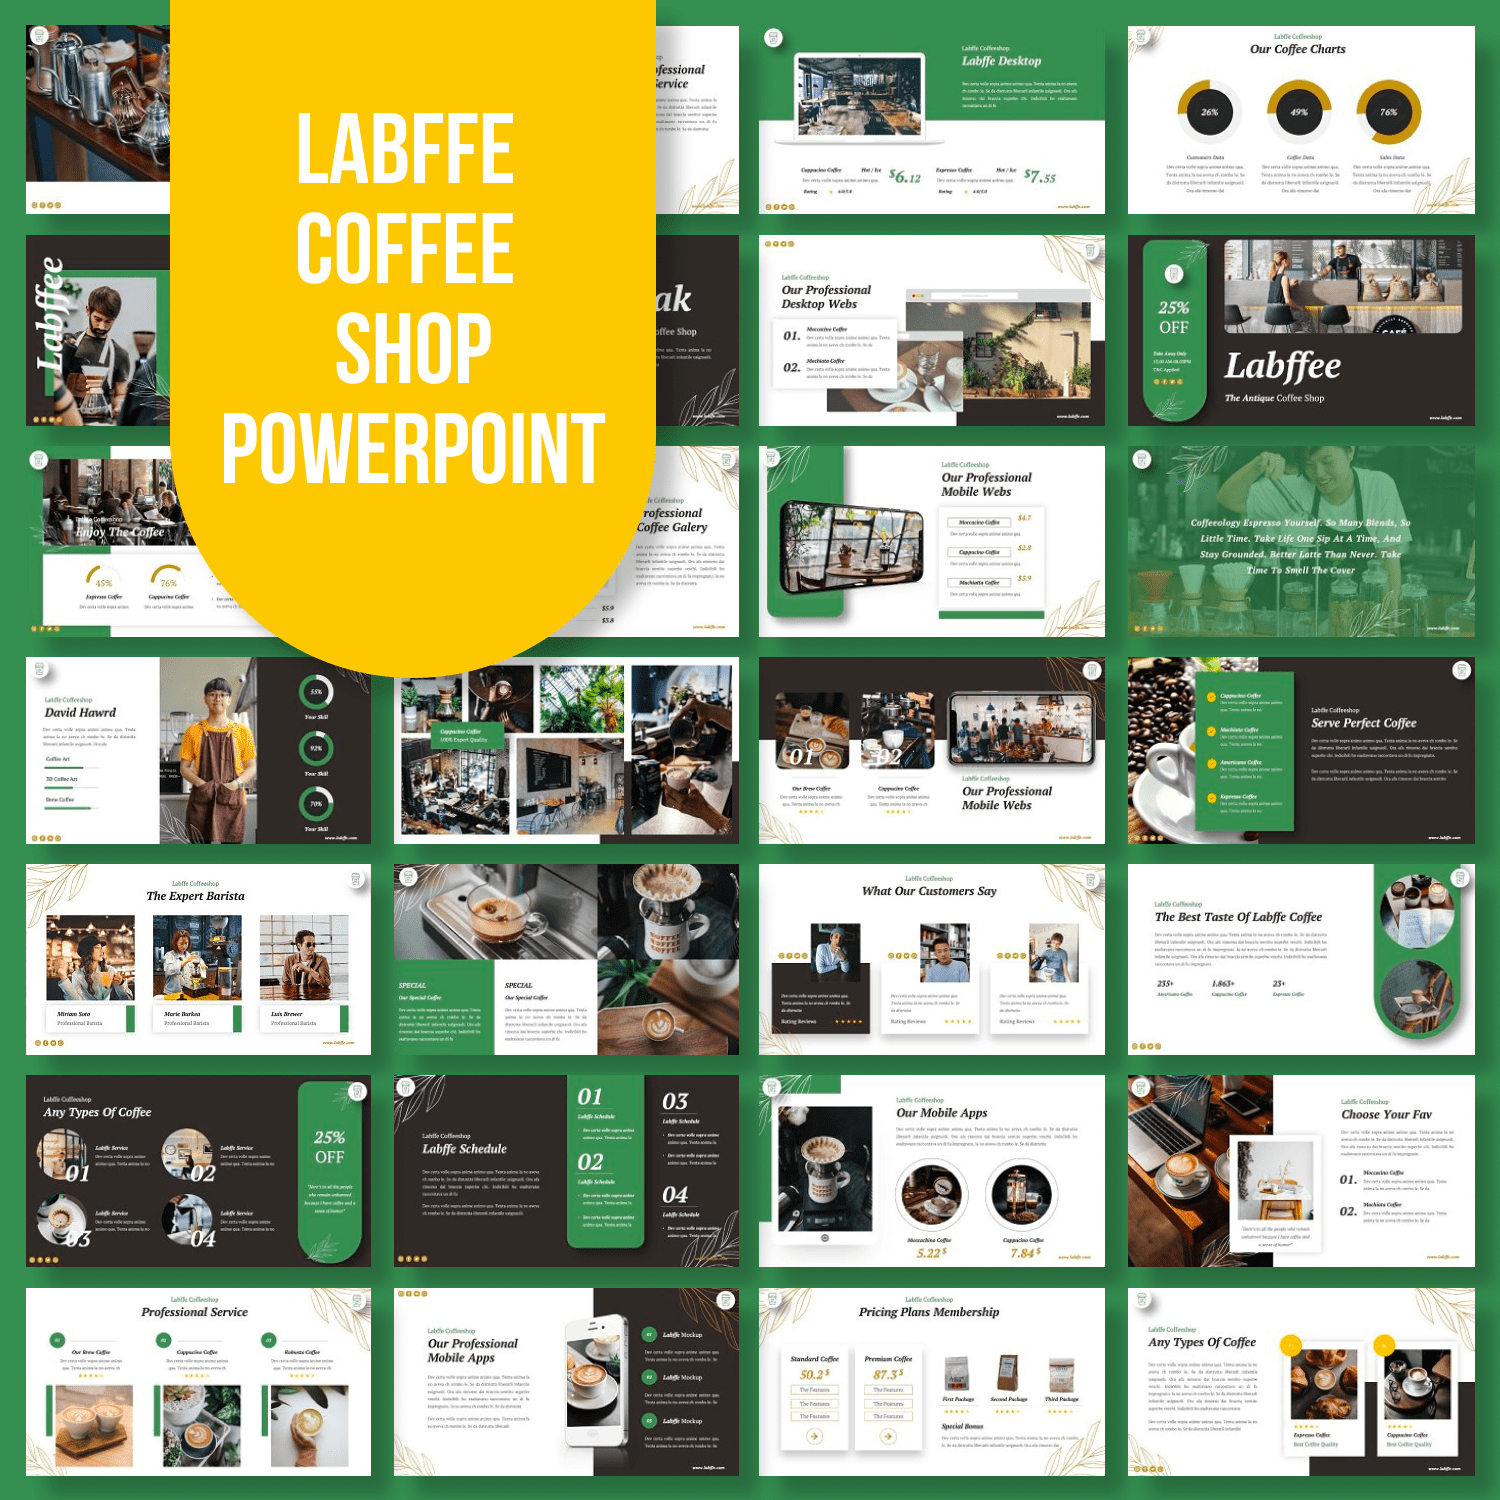 Labffe - Coffee Shop Powerpoint by MasterBundles.